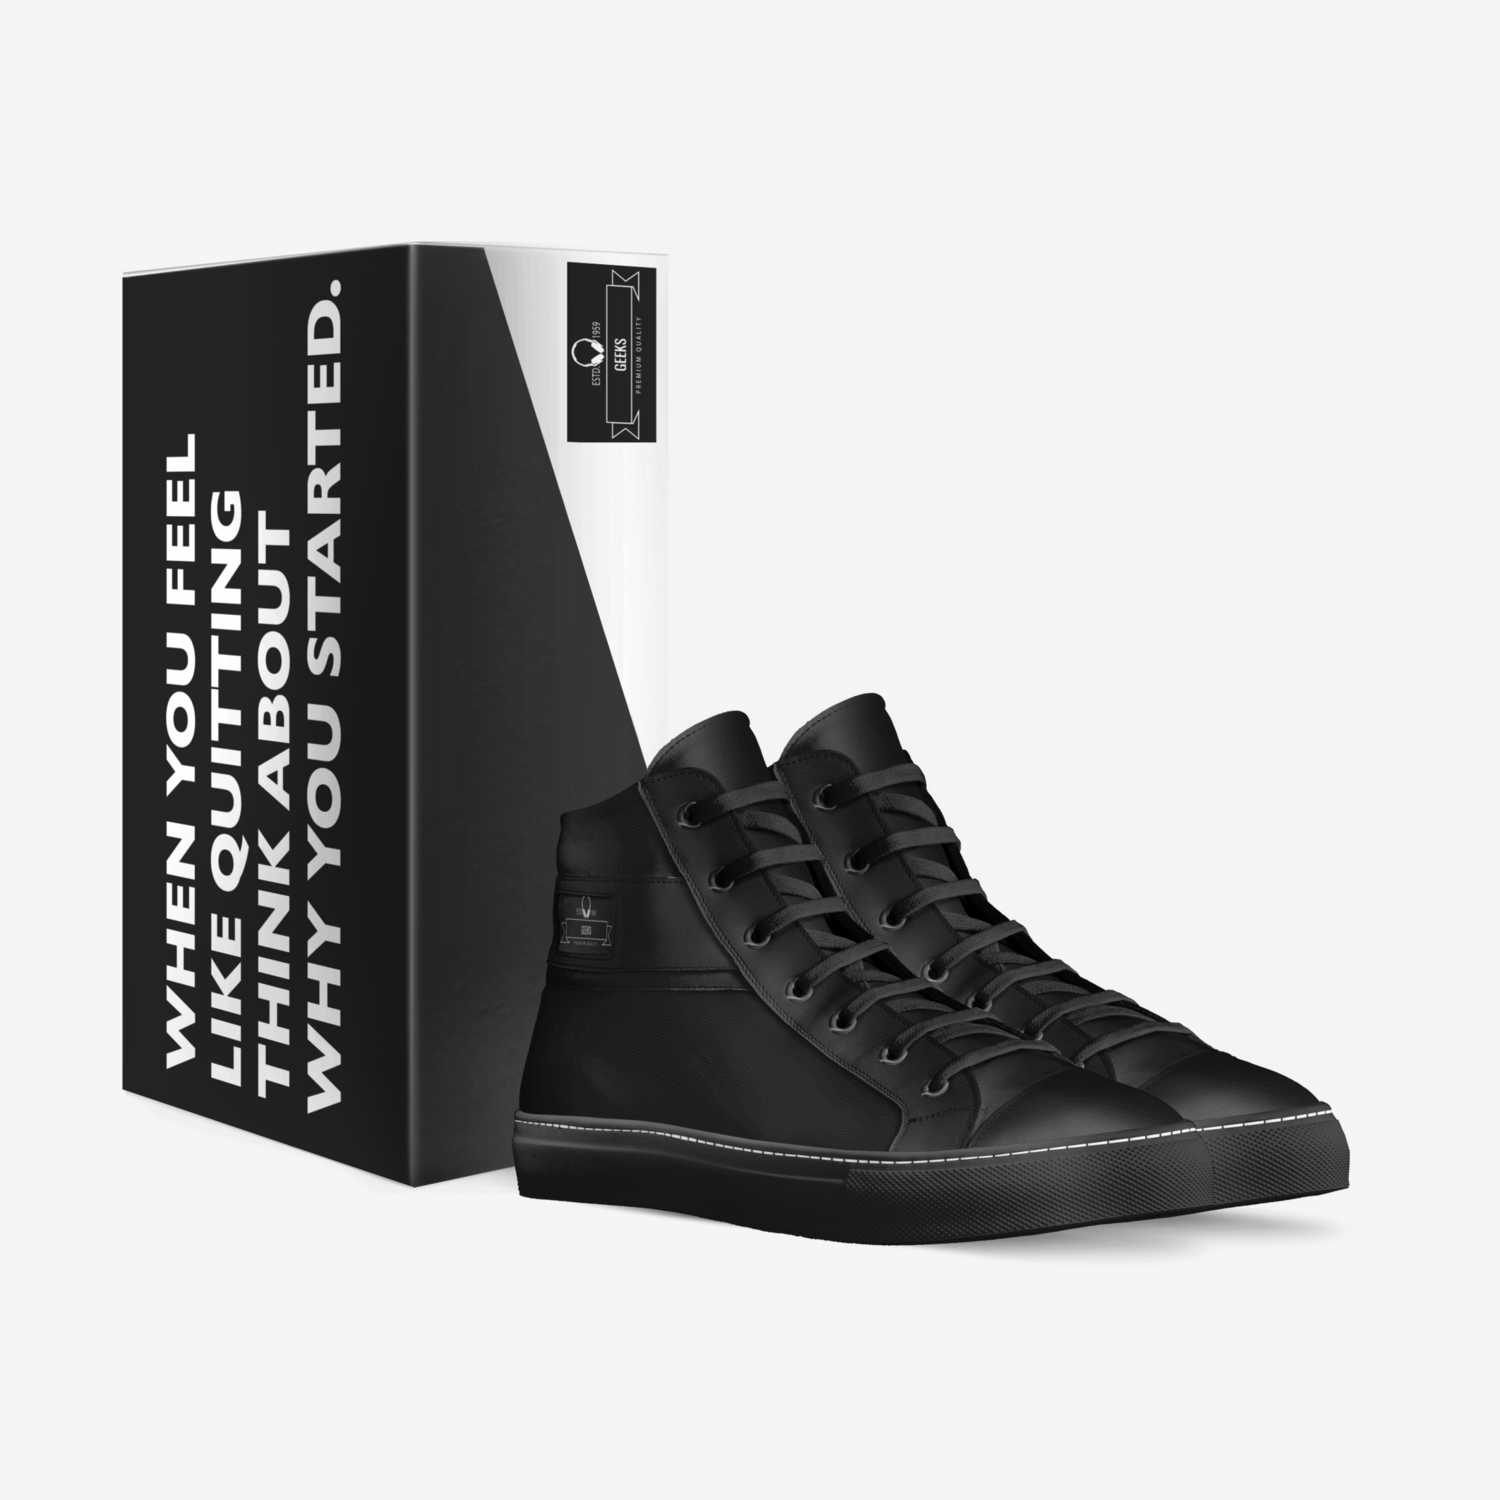 Geek II custom made in Italy shoes by Ryan Brown | Box view